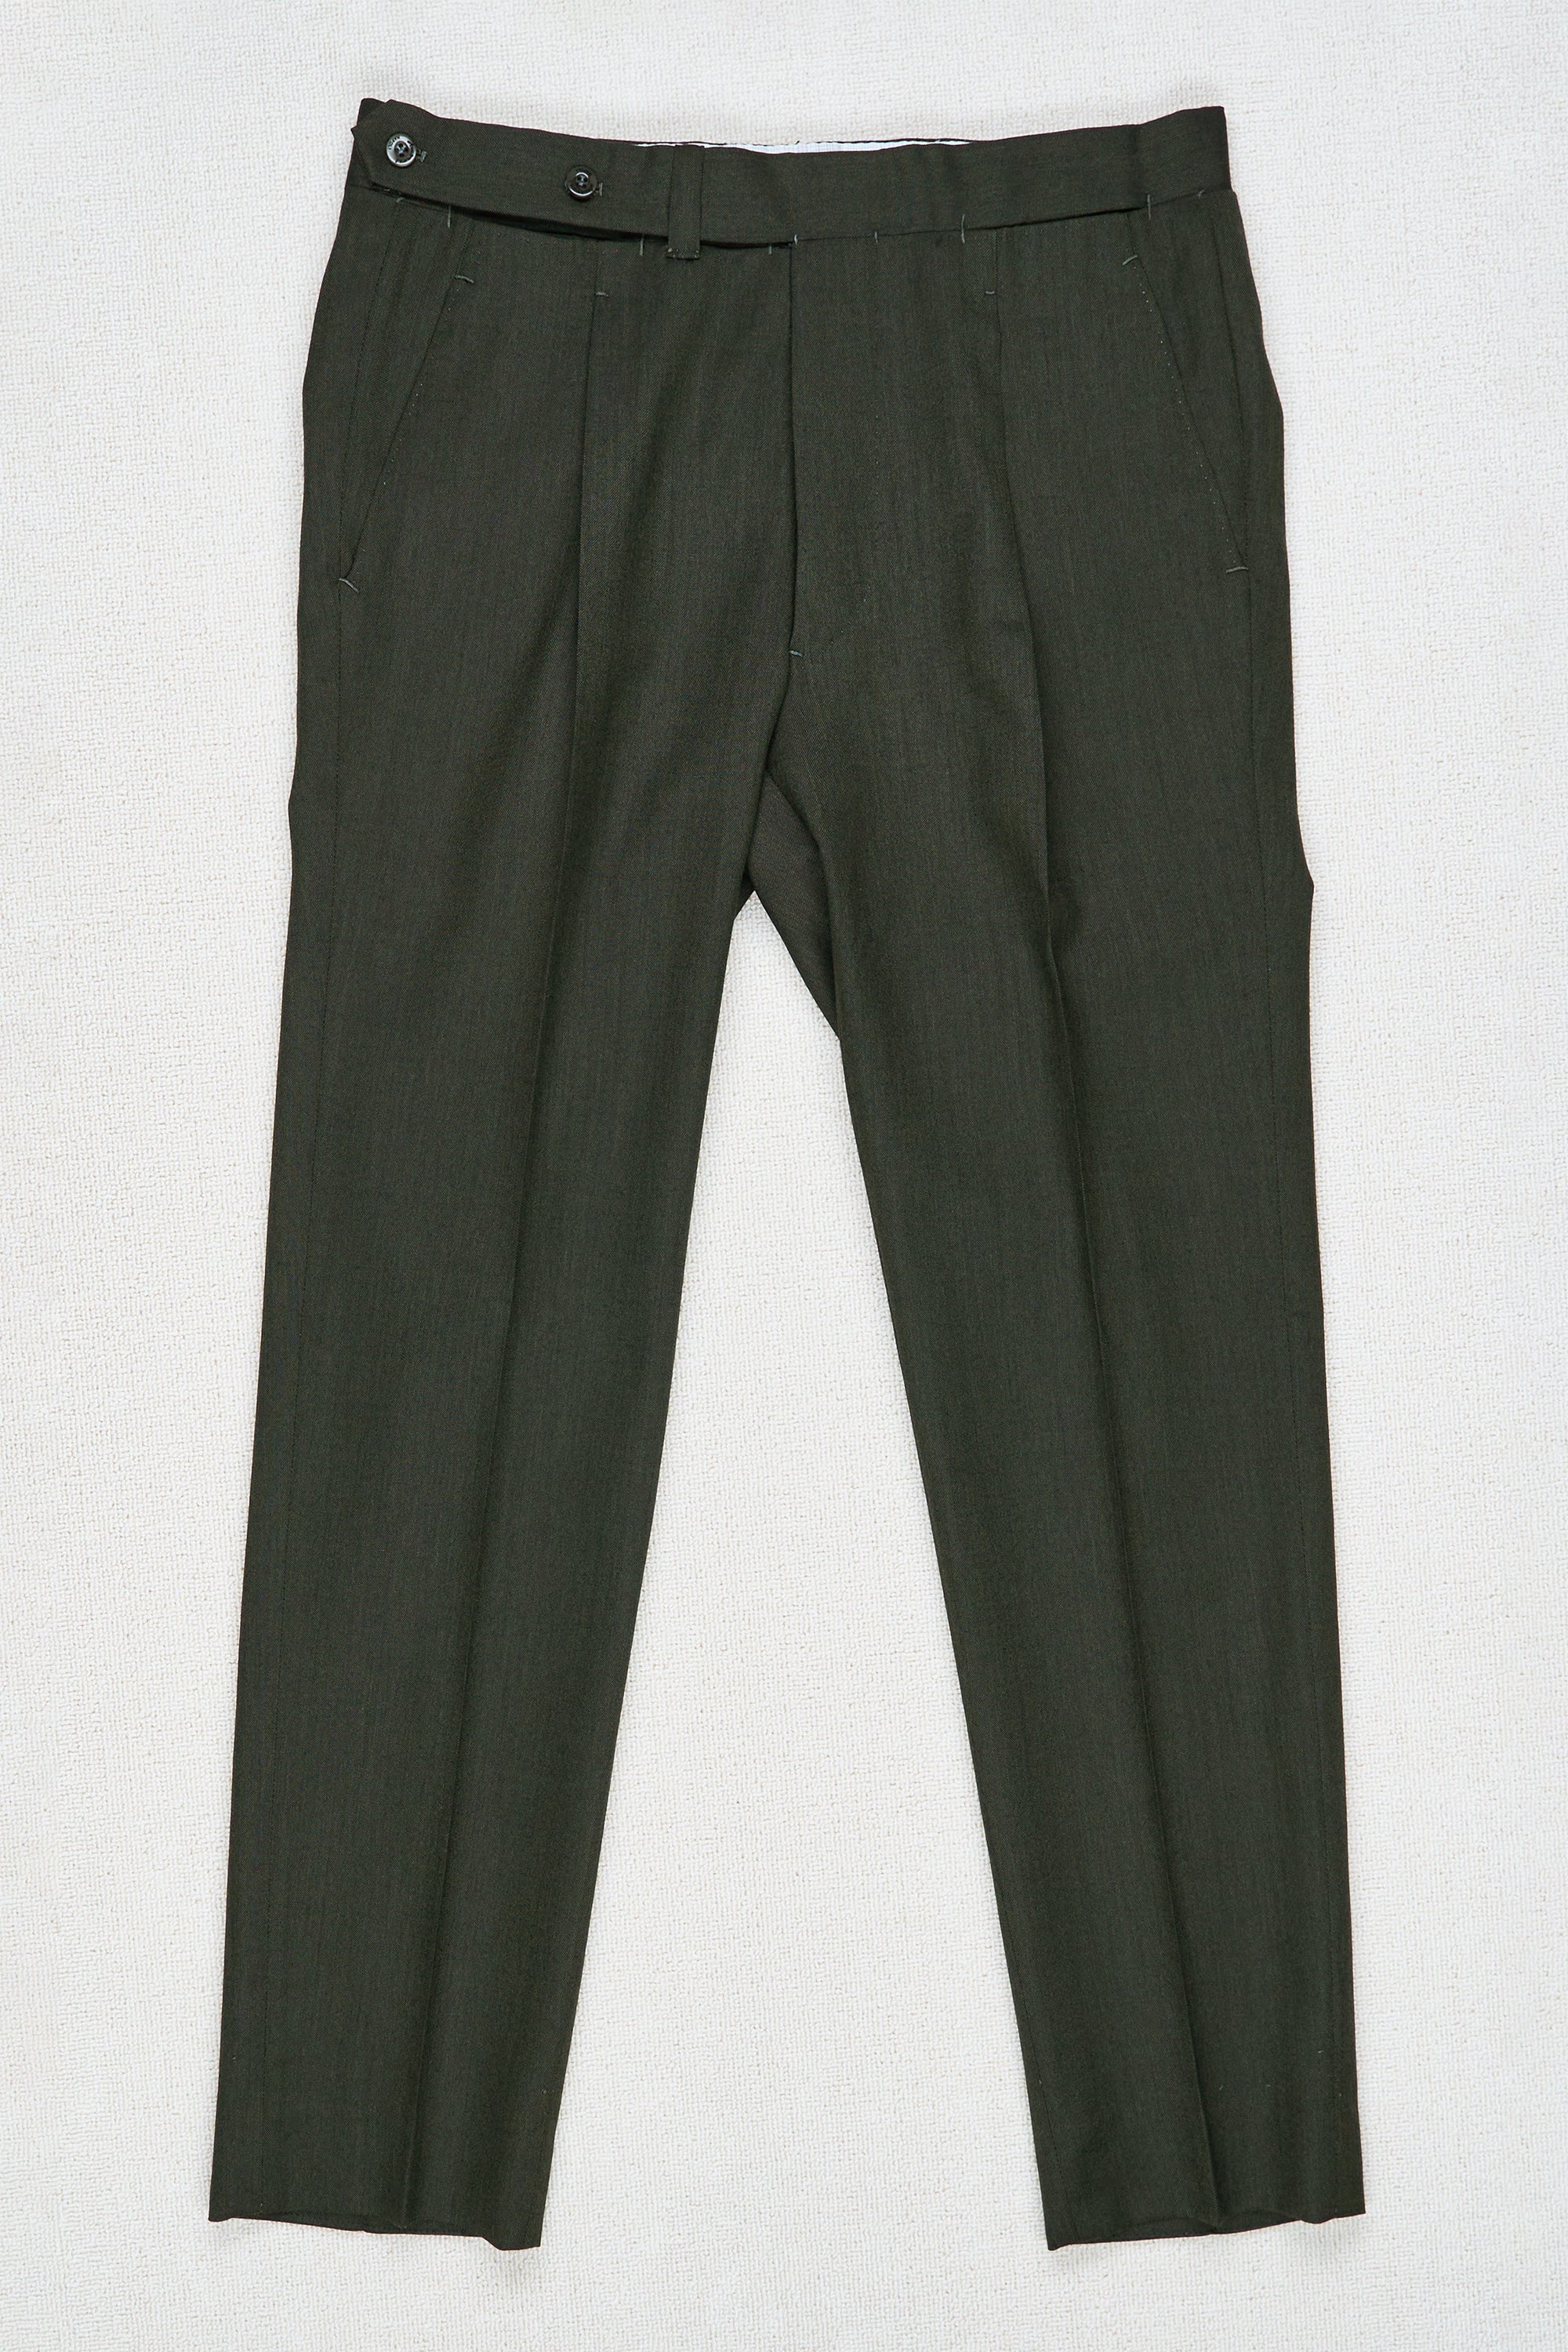 Ambrosi Napoli Dark Green Wool Single Pleat Trousers Bespoke